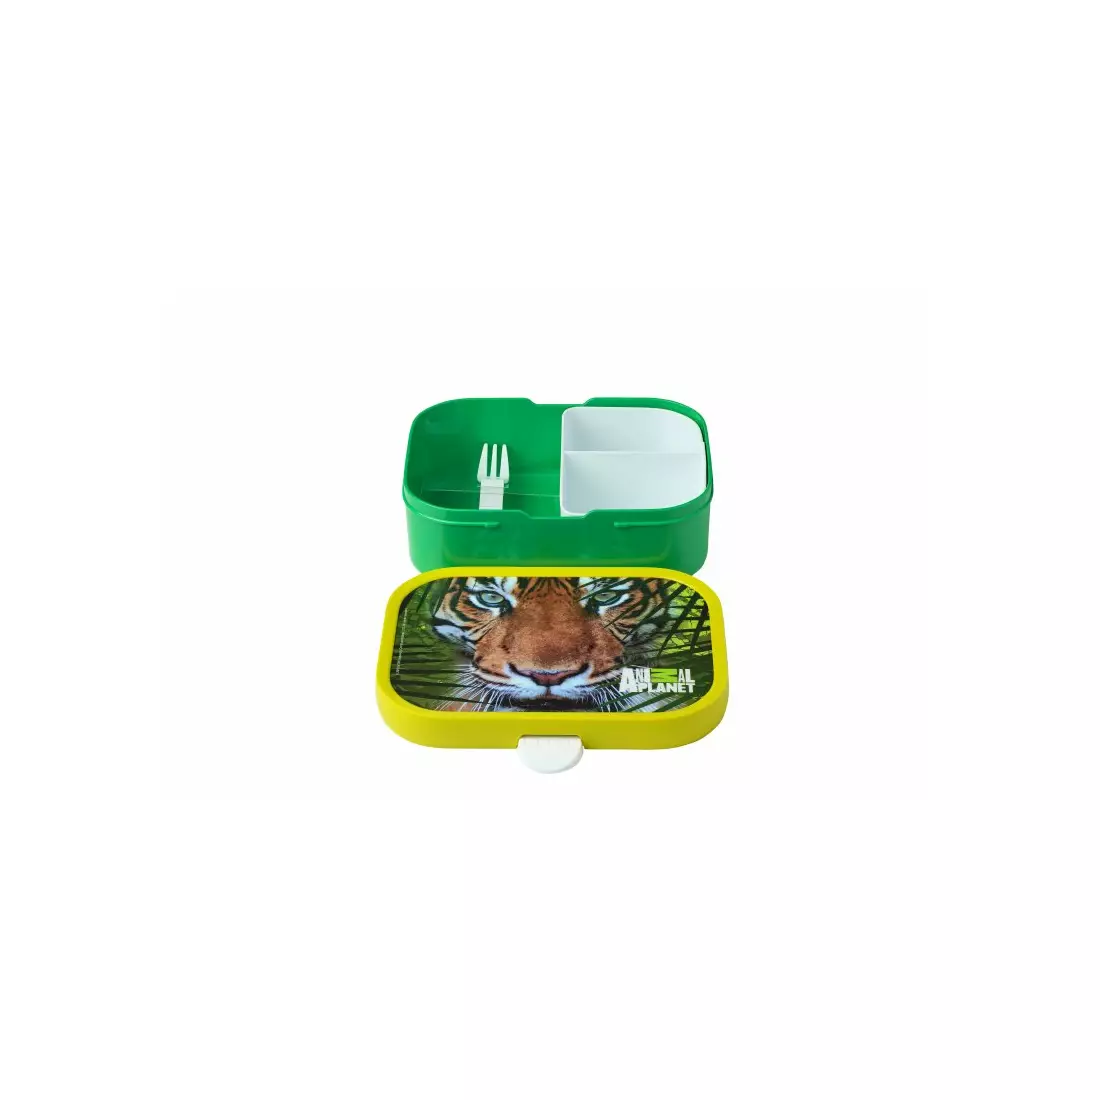 Mepal Campus Animal Planet Tiger detská lunchbox, zeleno-žltá